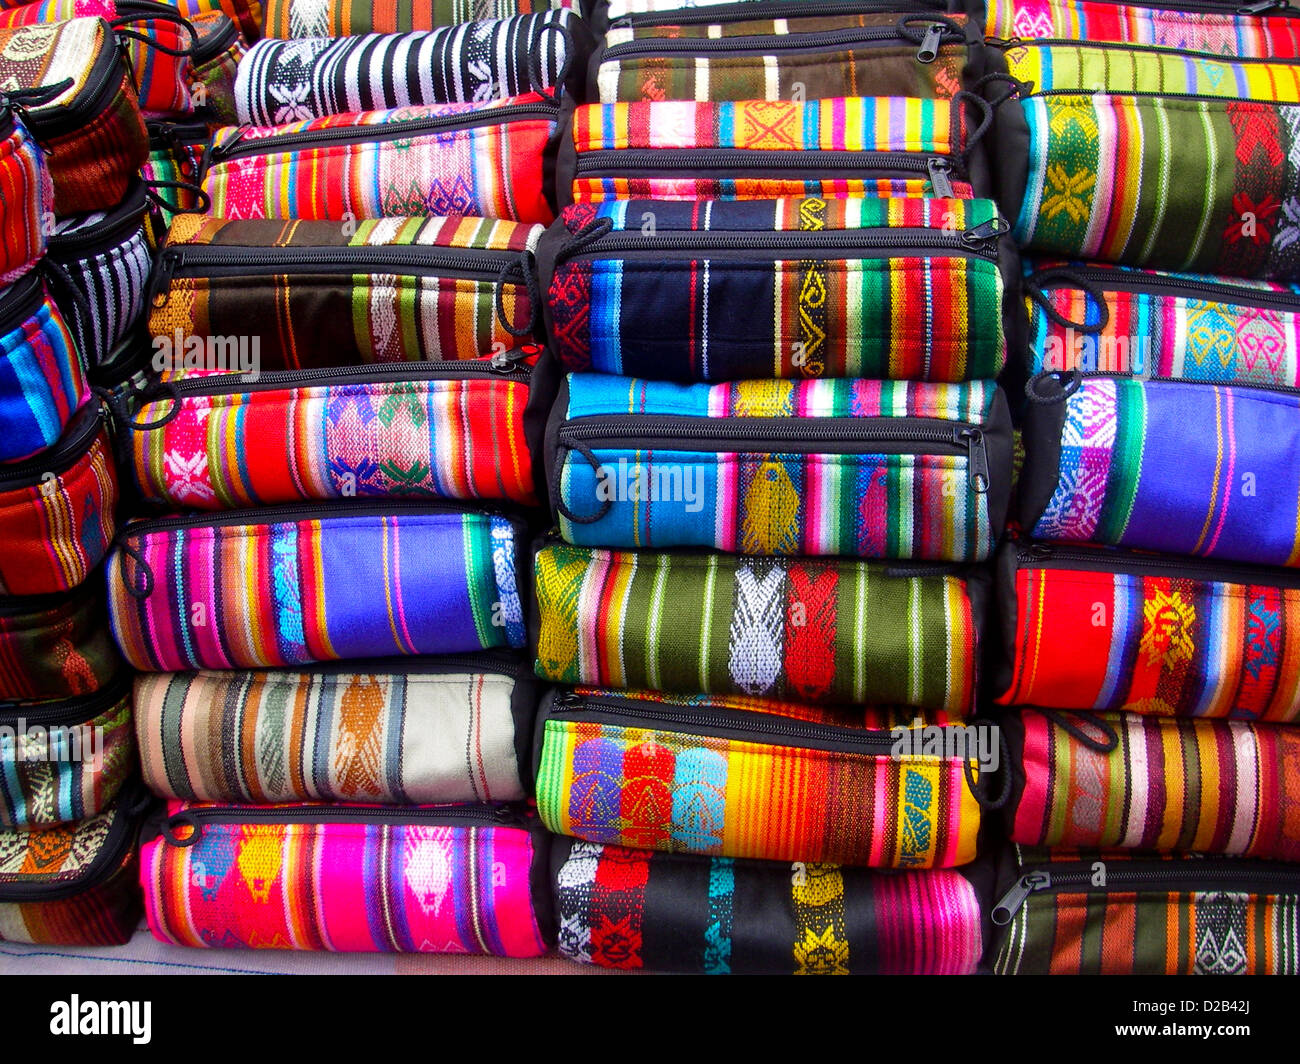 Mutil colored Ecuadorian woven bags made from alpaca wool found in an Ecuador market, South America Stock Photo